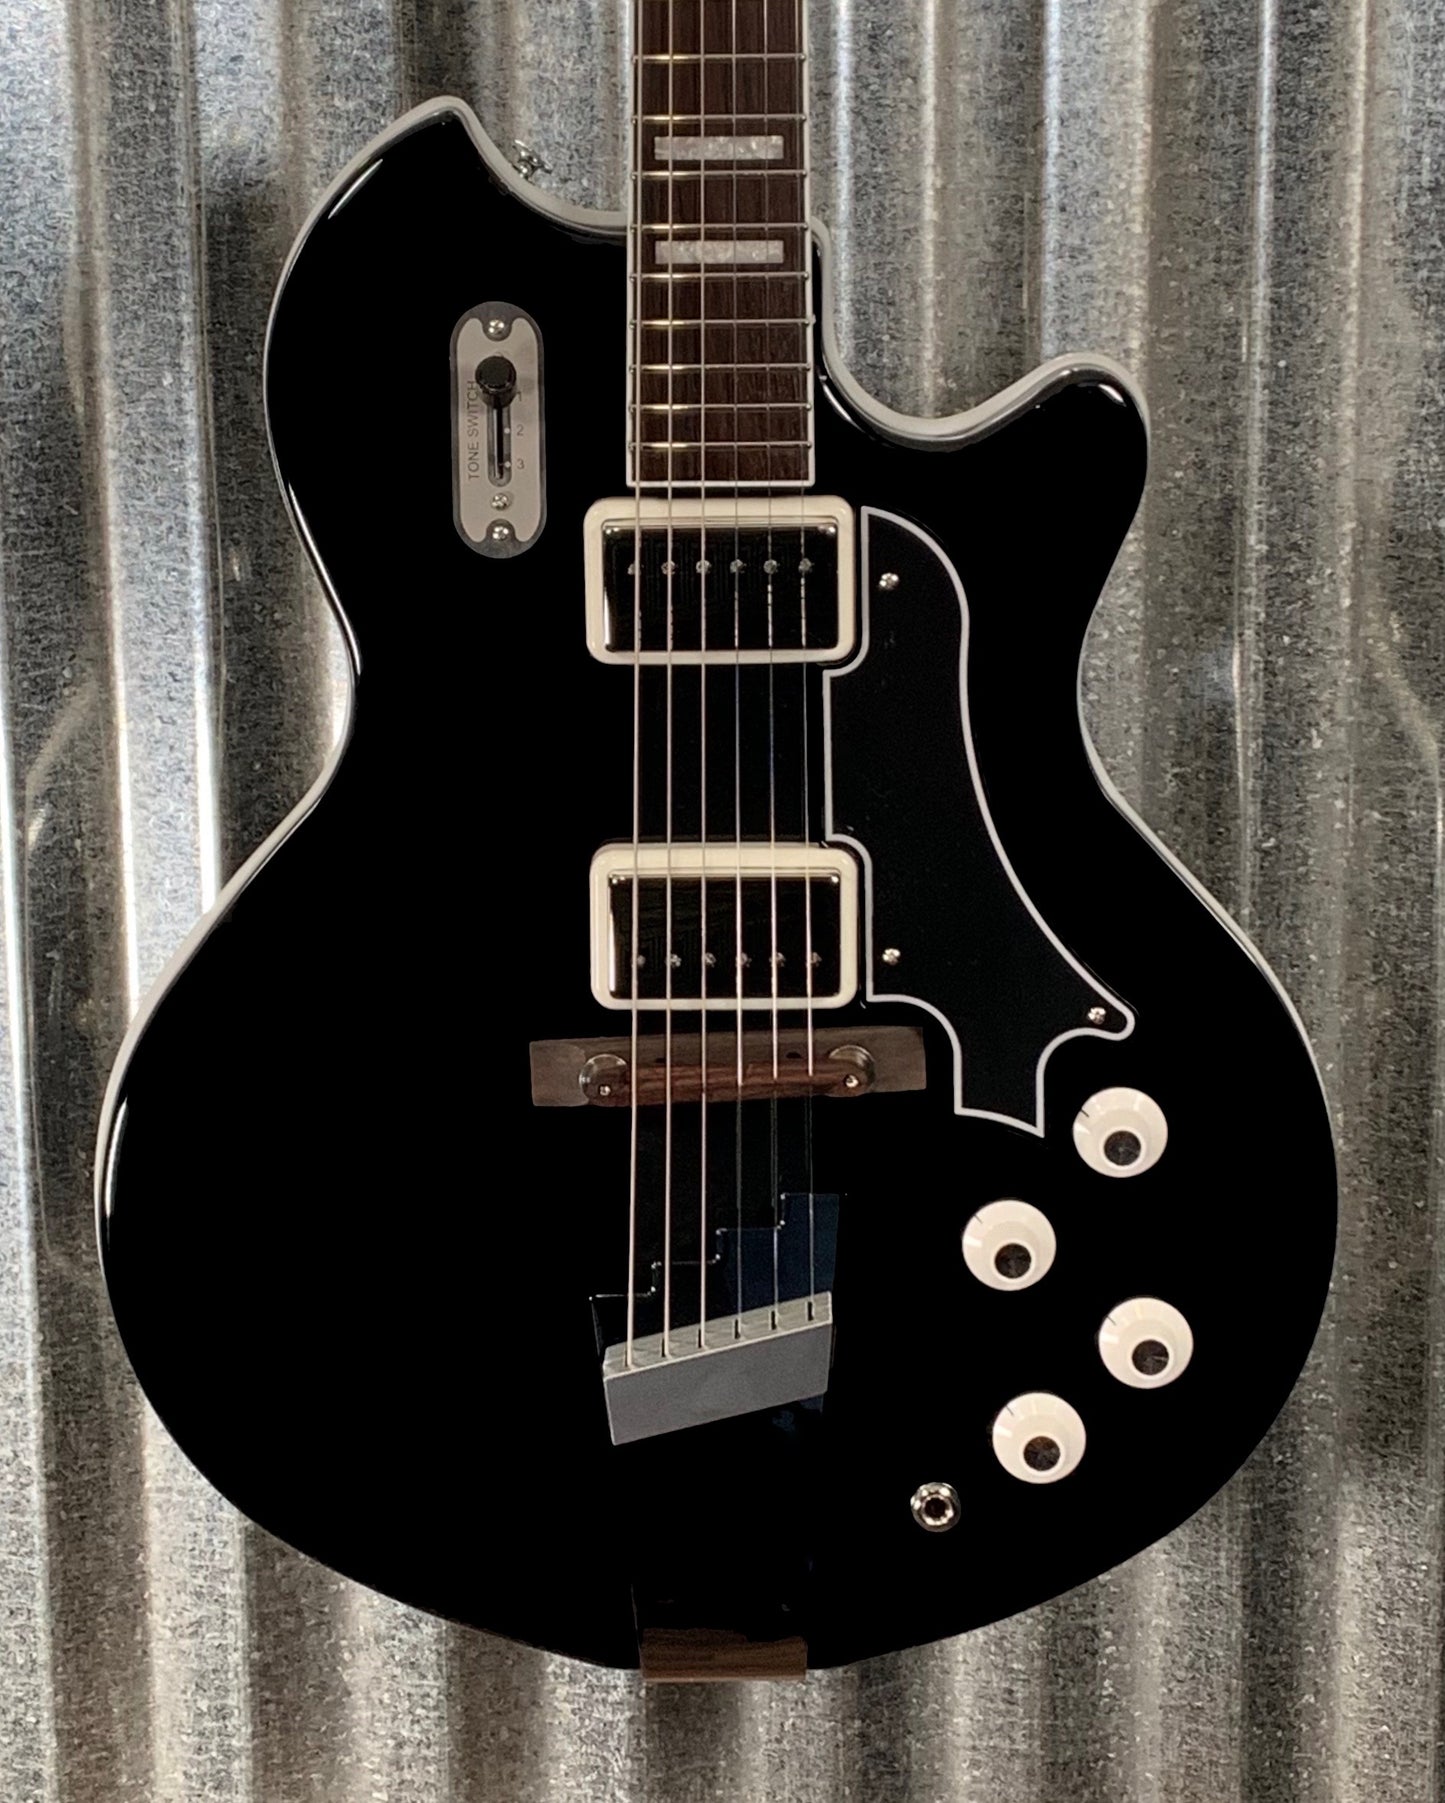 Supro Americana 1582JB Coronado II Jet Black Guitar #0966